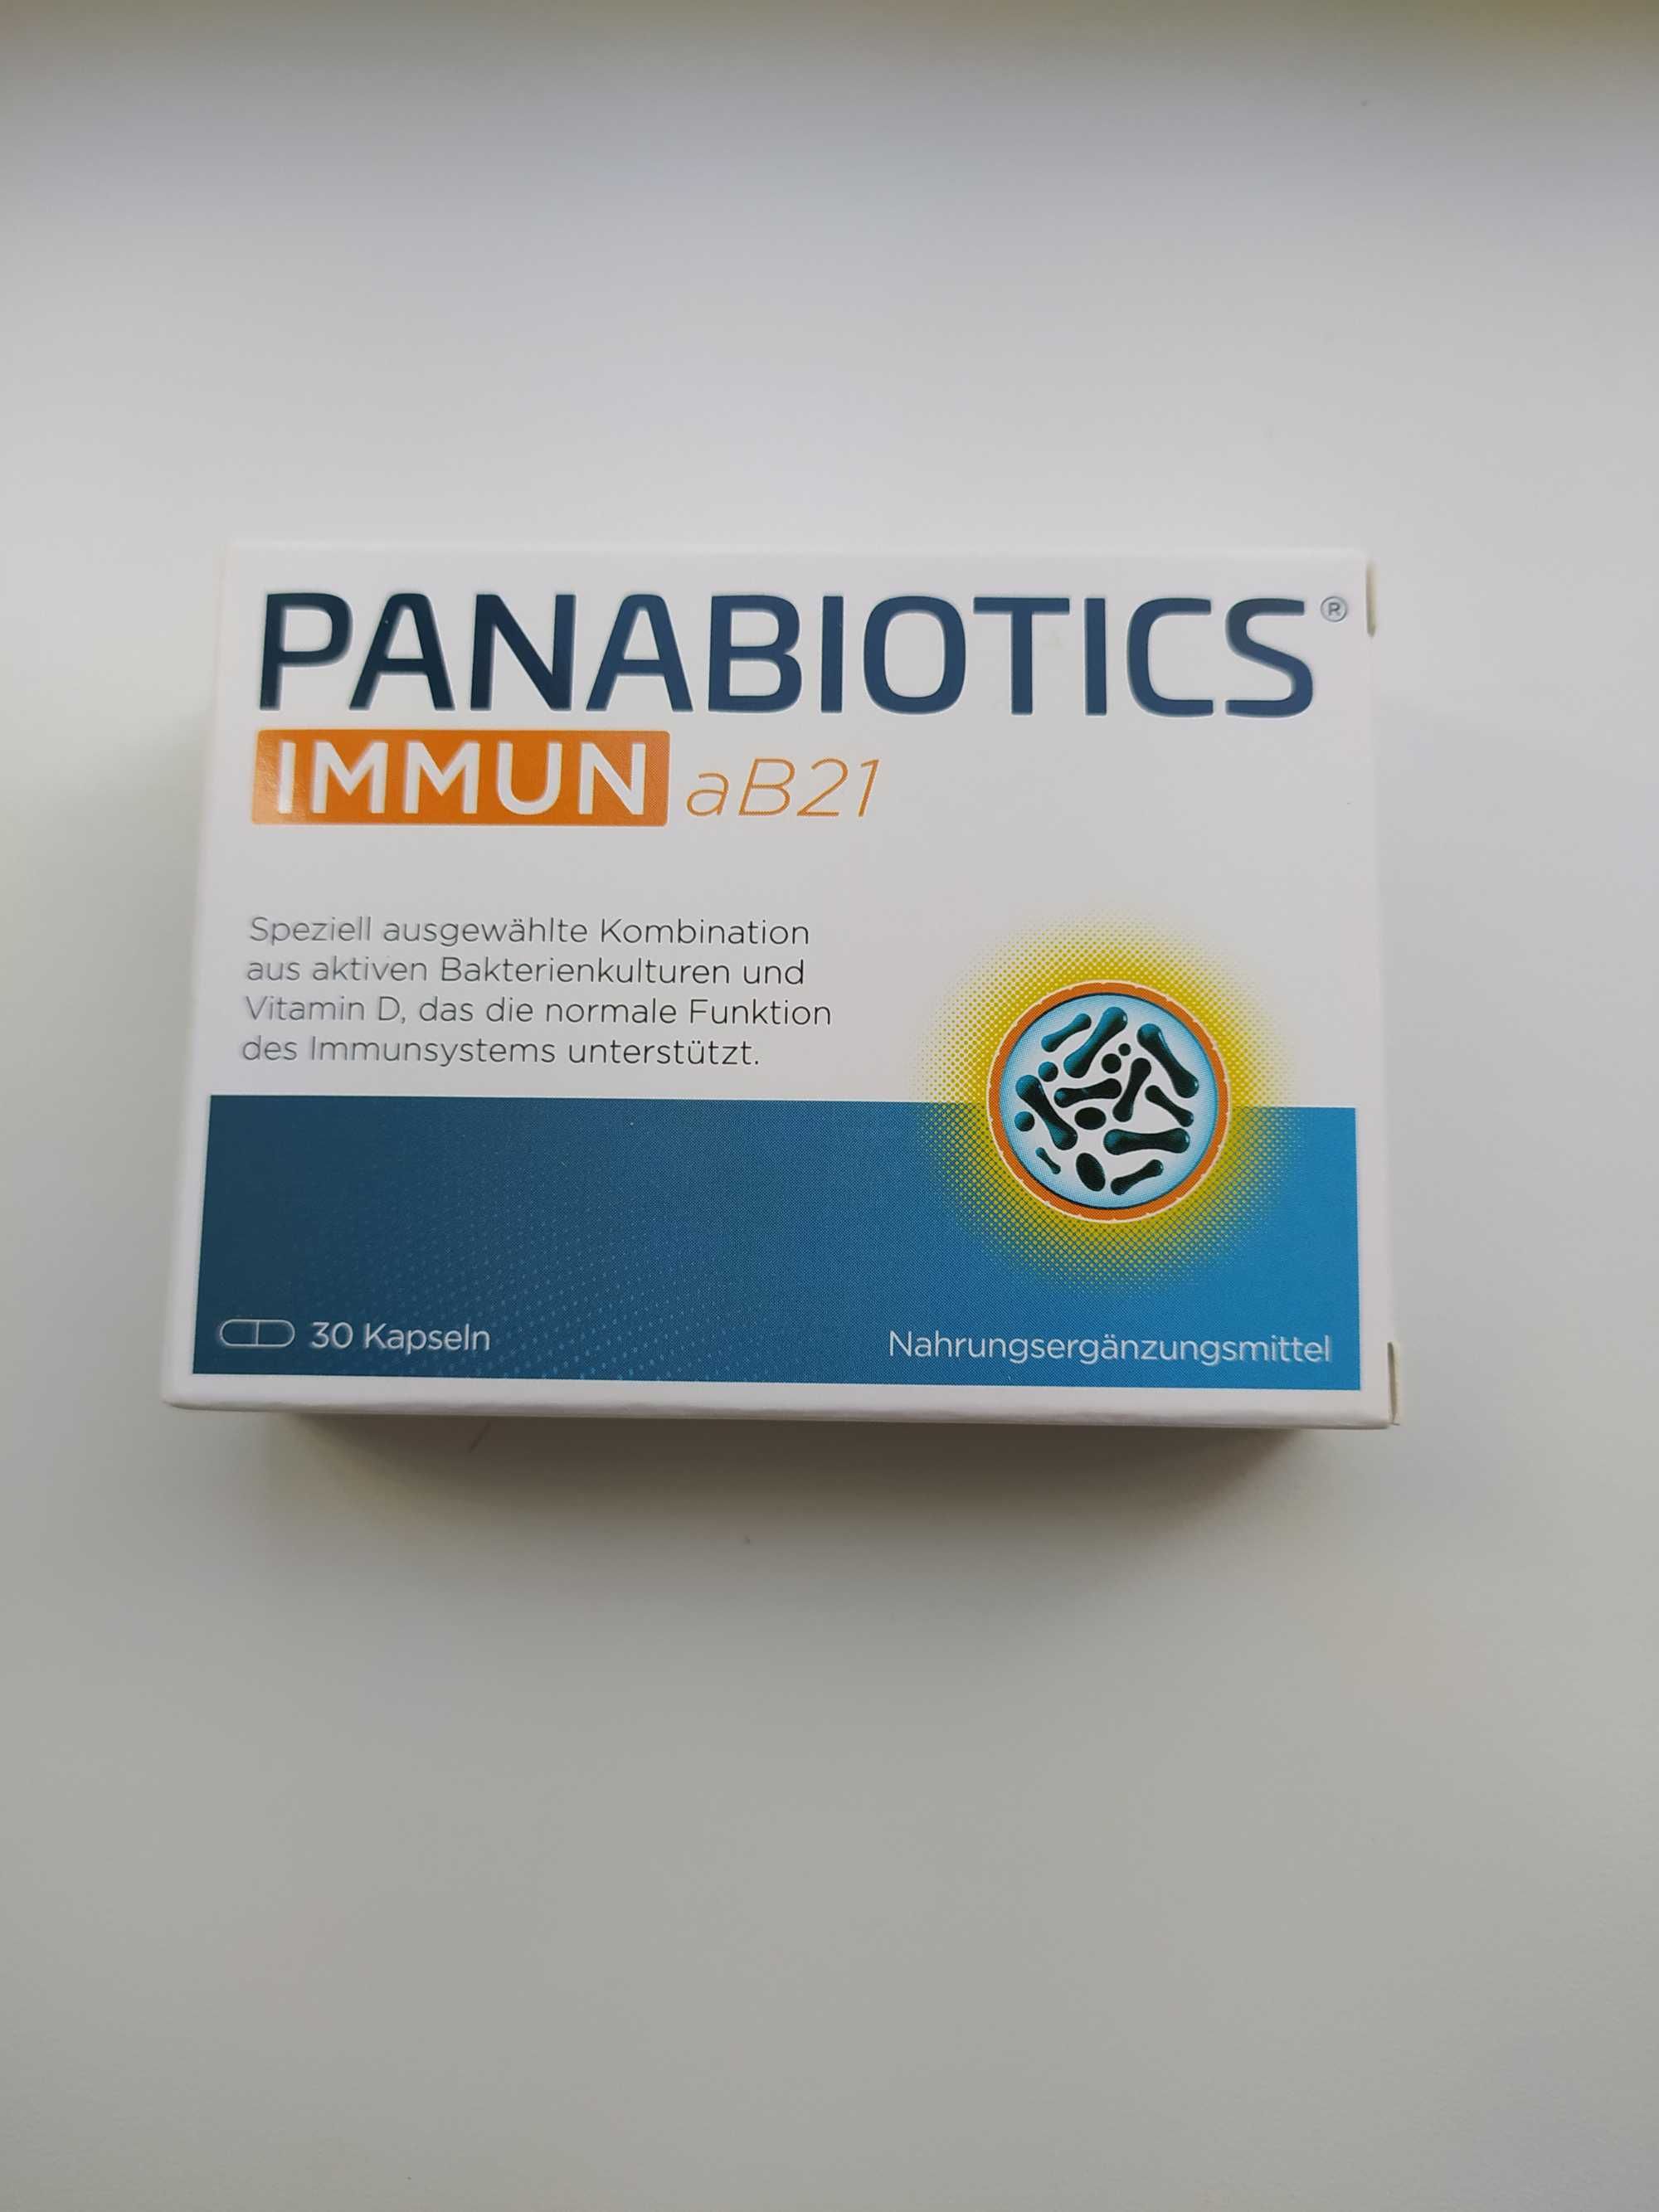 Пробиотики PANABIOTICS® immun aB21